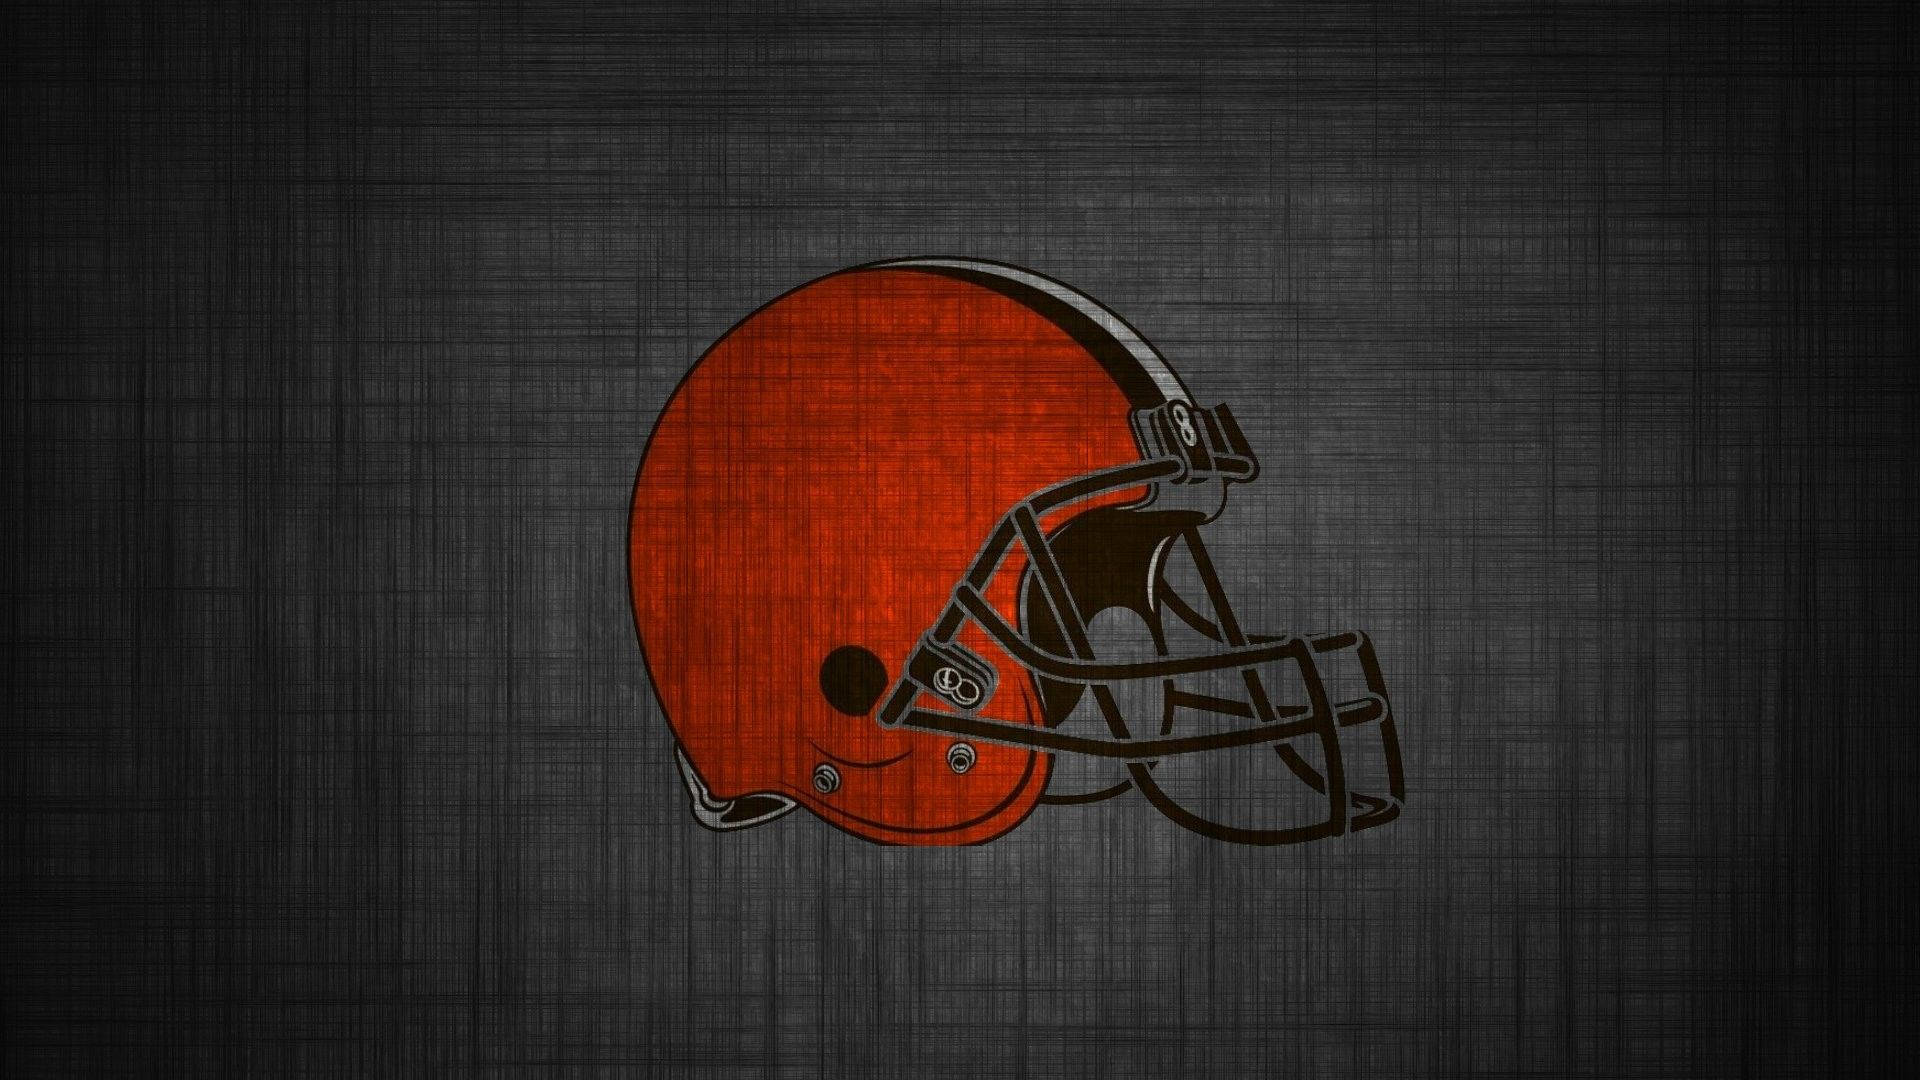 Sinister Cleveland Browns Logo Wallpaper